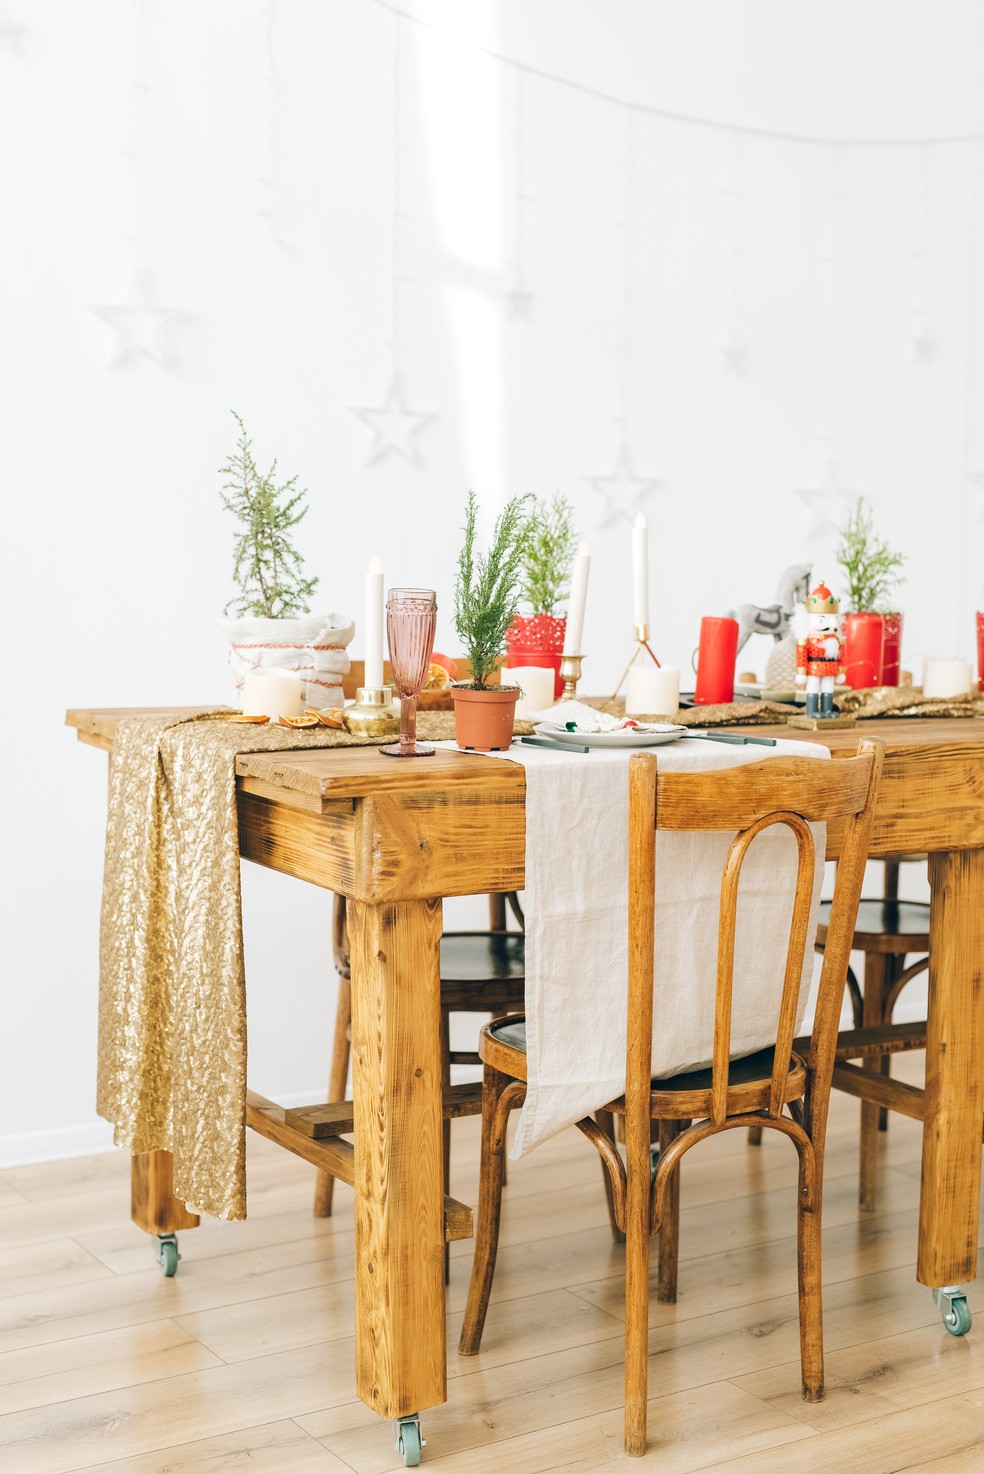 Mesa de jantar preparada para as refeições natalinas — Foto: Leeloo Thefirst/Pexels